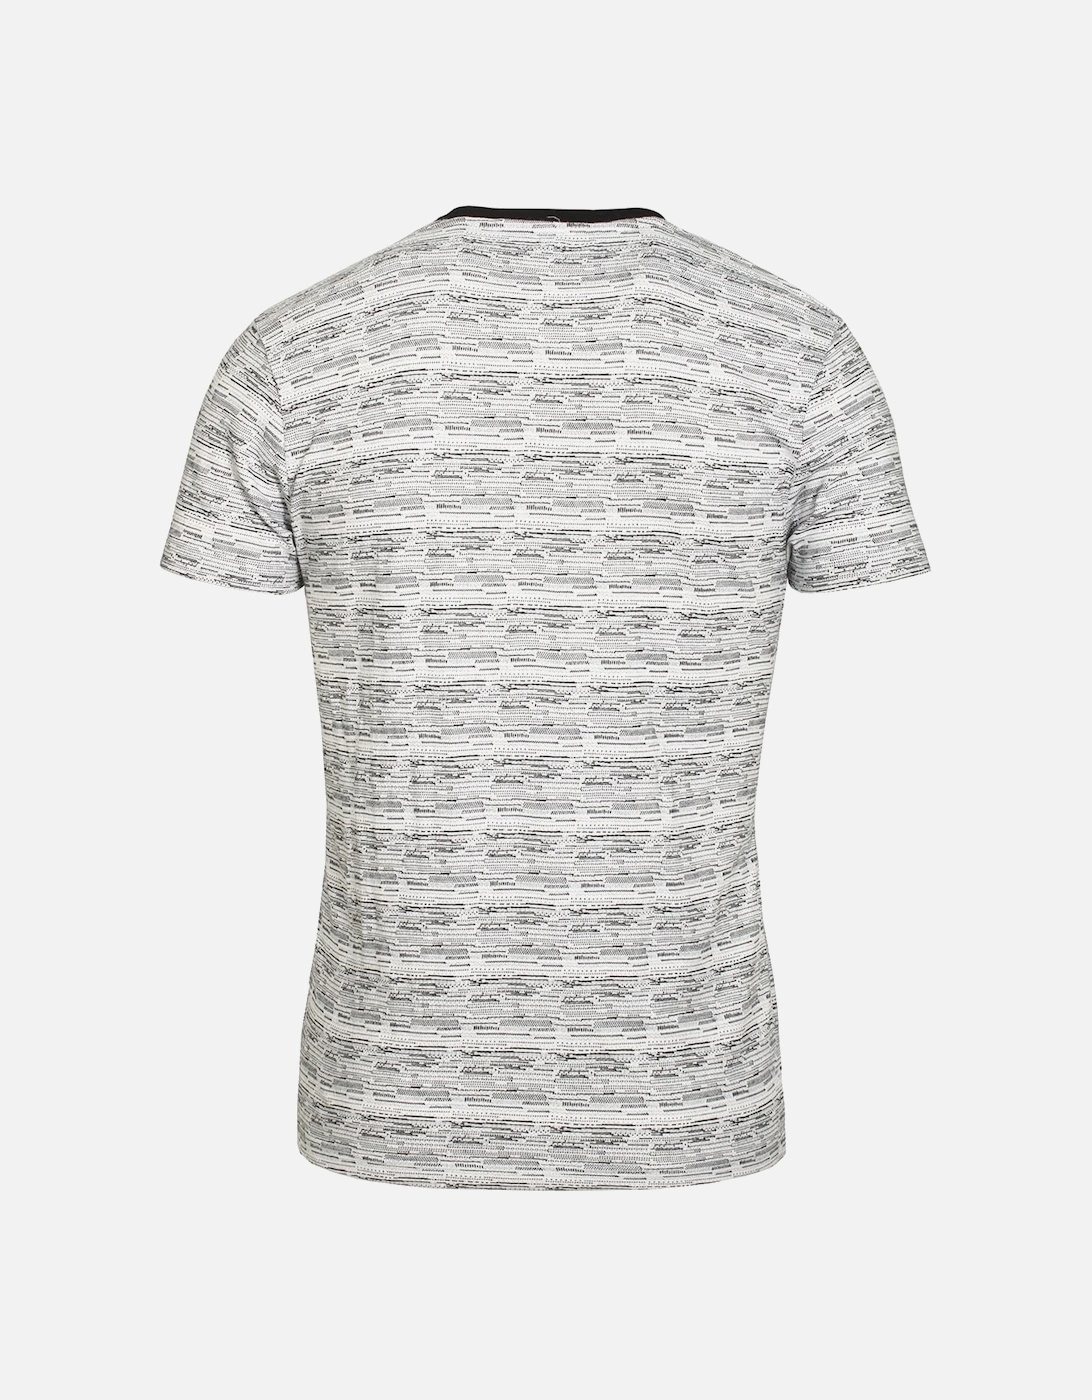 Hewitt Jacquard Print T-Shirt White